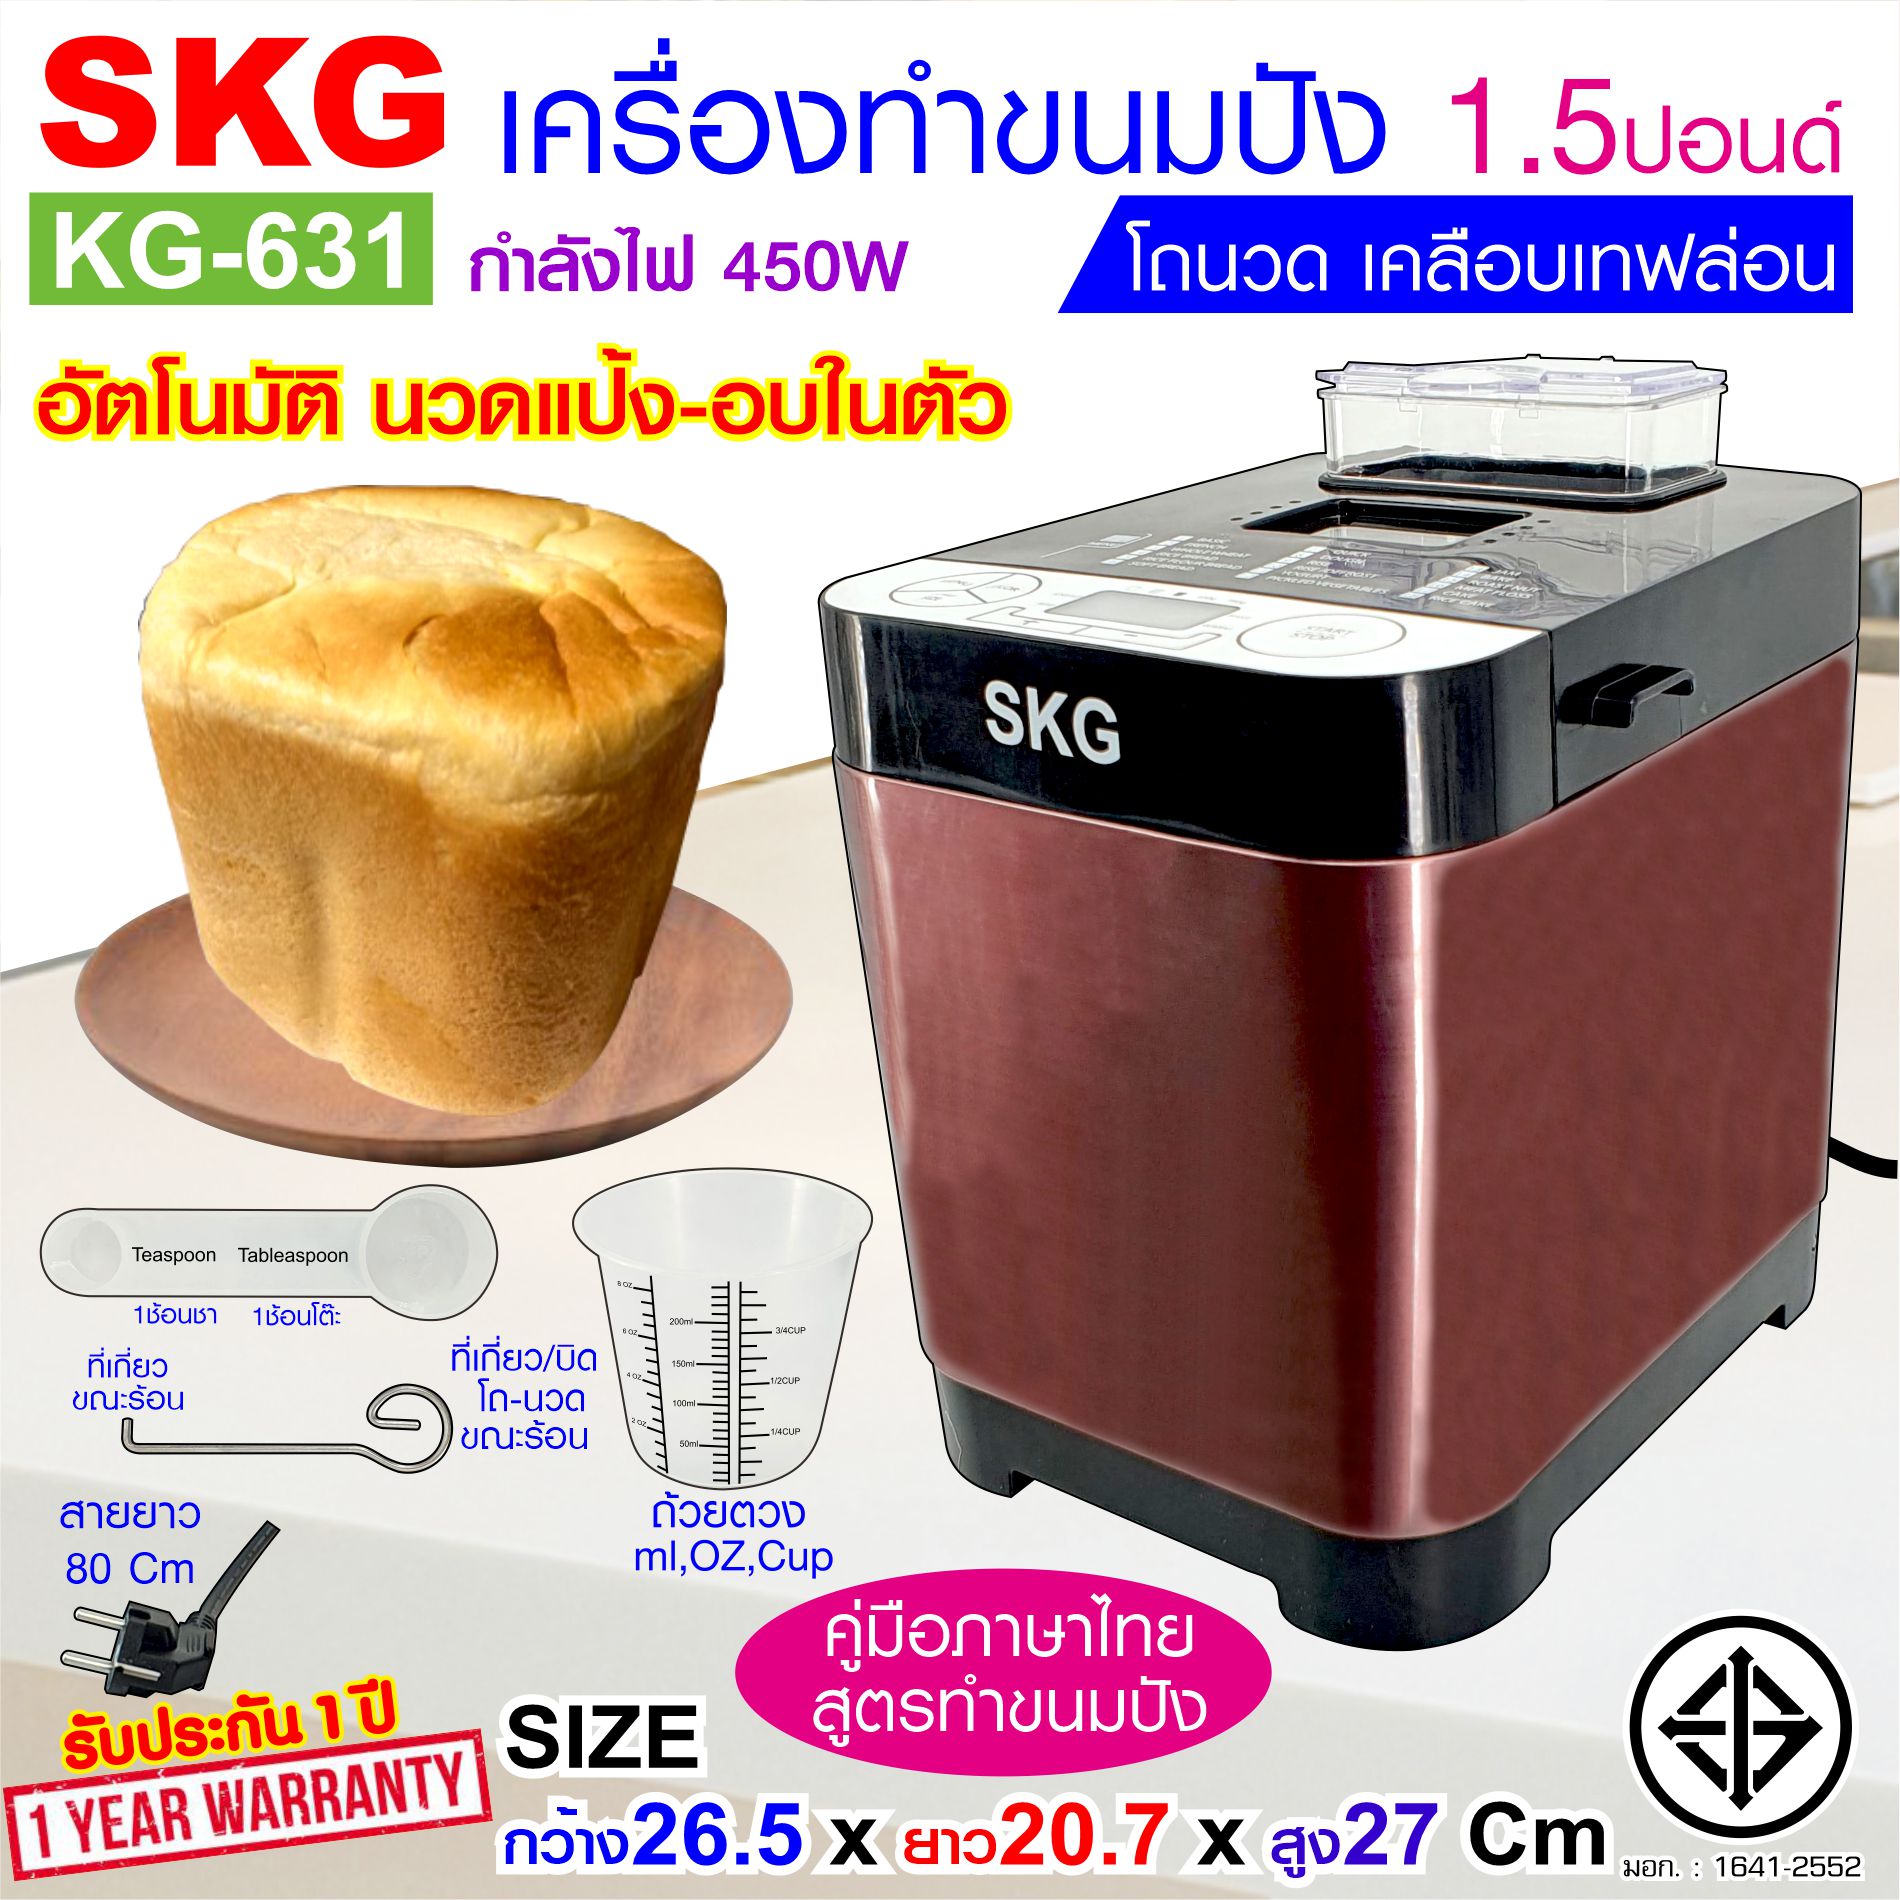 SKG เครื่องทำขนมปัง1.5ปอนด์ มีประกัน ทำขนมปังอัตโนมัติ 2in1เครื่องนวดขนมปัง+เครื่องอบขนมปัง เครื่องทำหมั่นโถว+ขนมปัง เครื่องทำขนมปัง